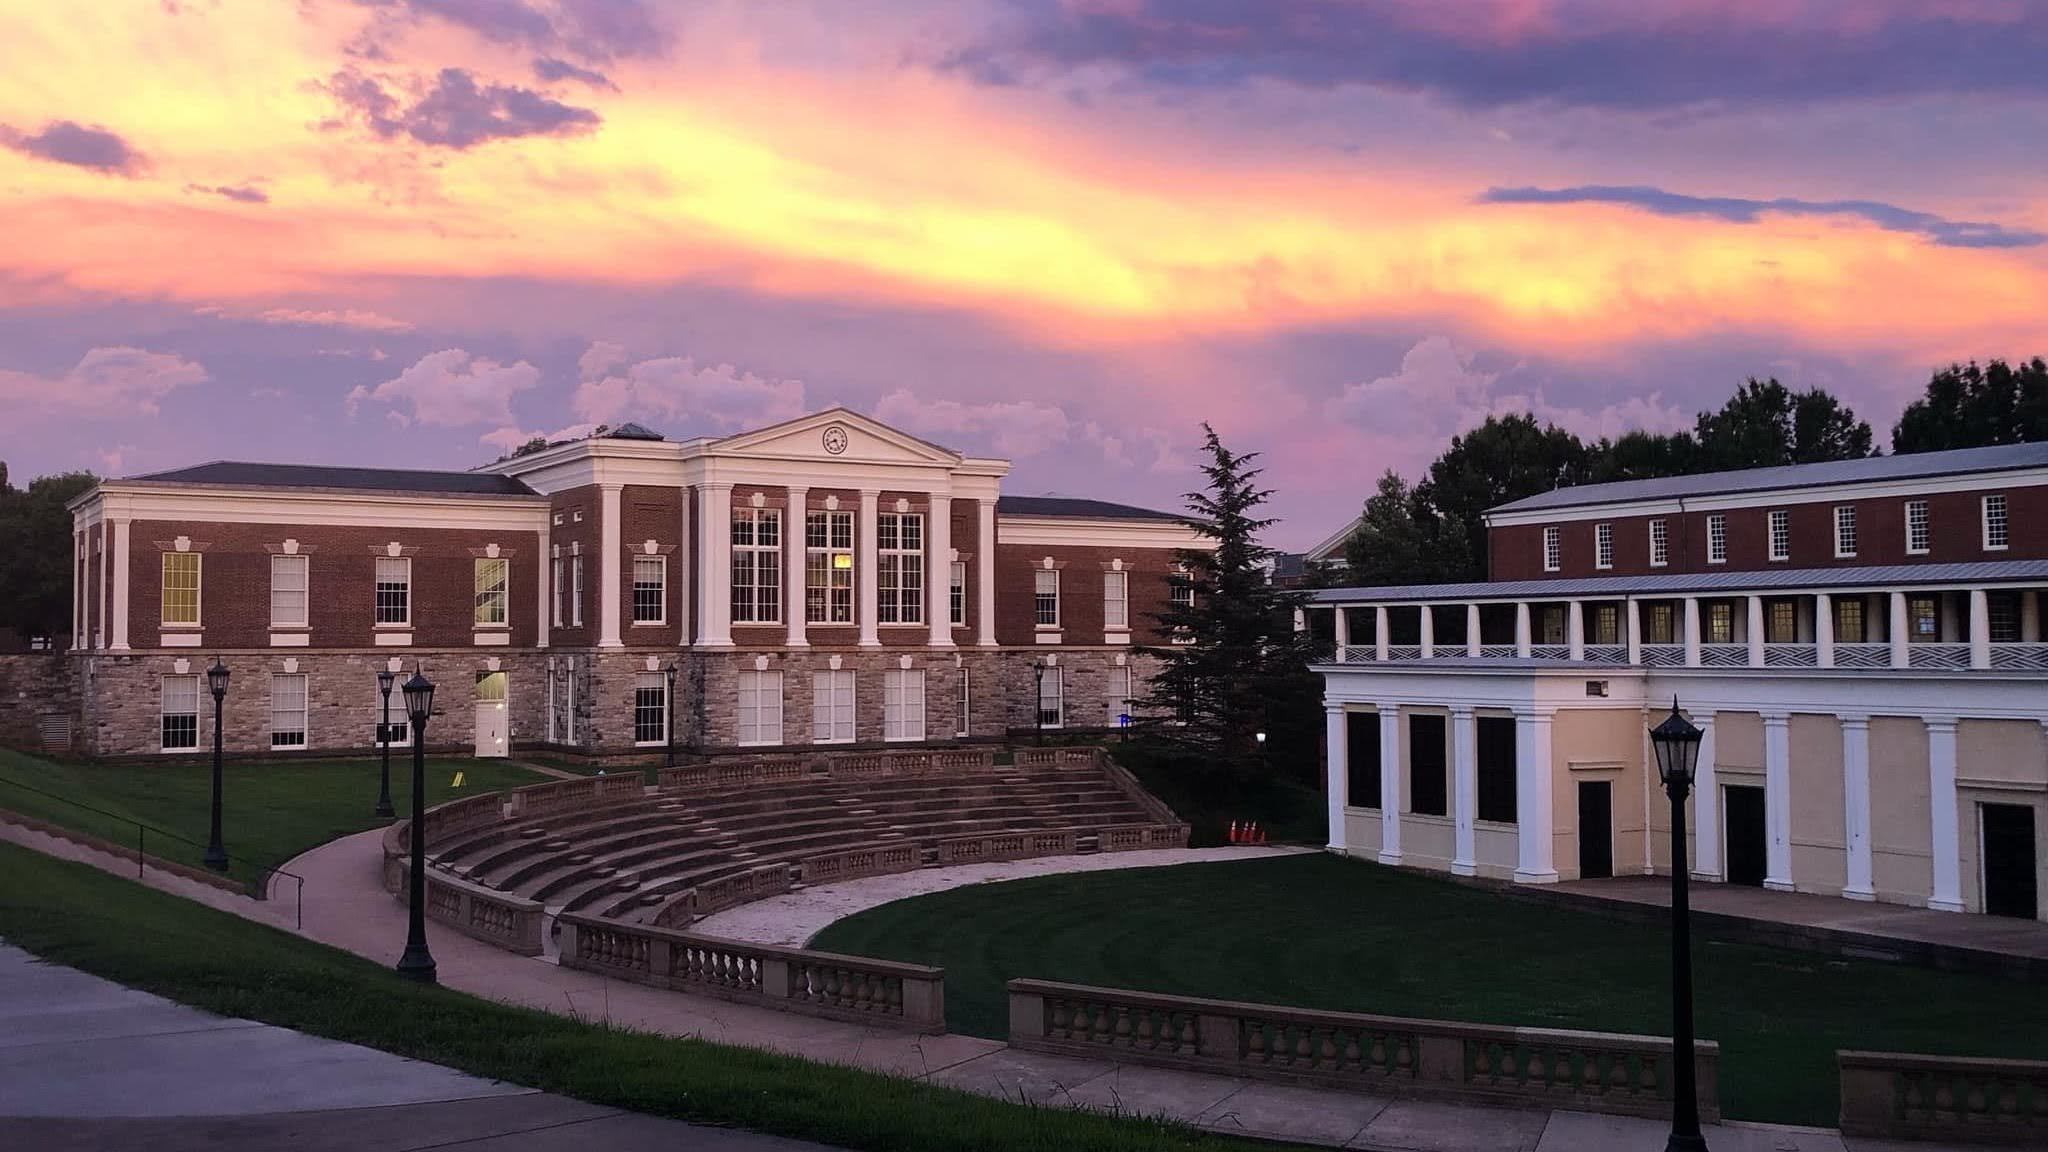 A stunning summer sunset over UVA campus buildings